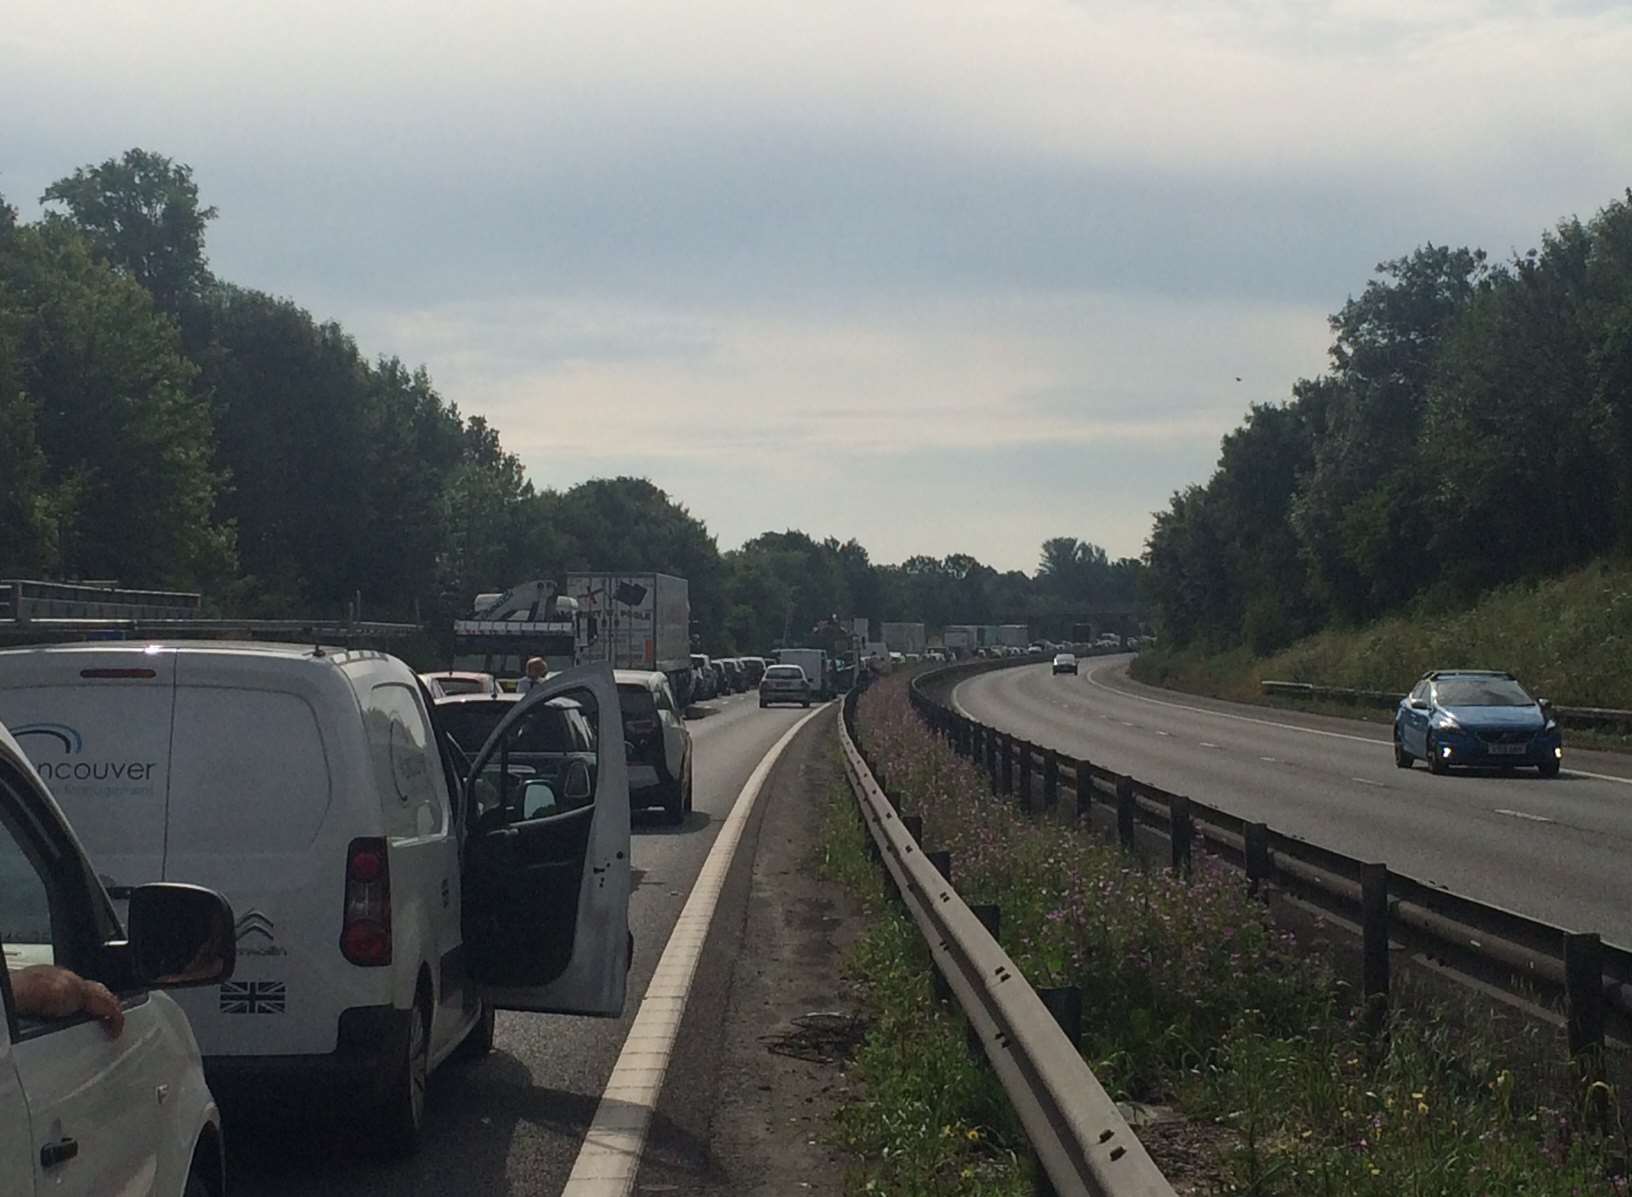 The accident originally shut both lanes of the motorway